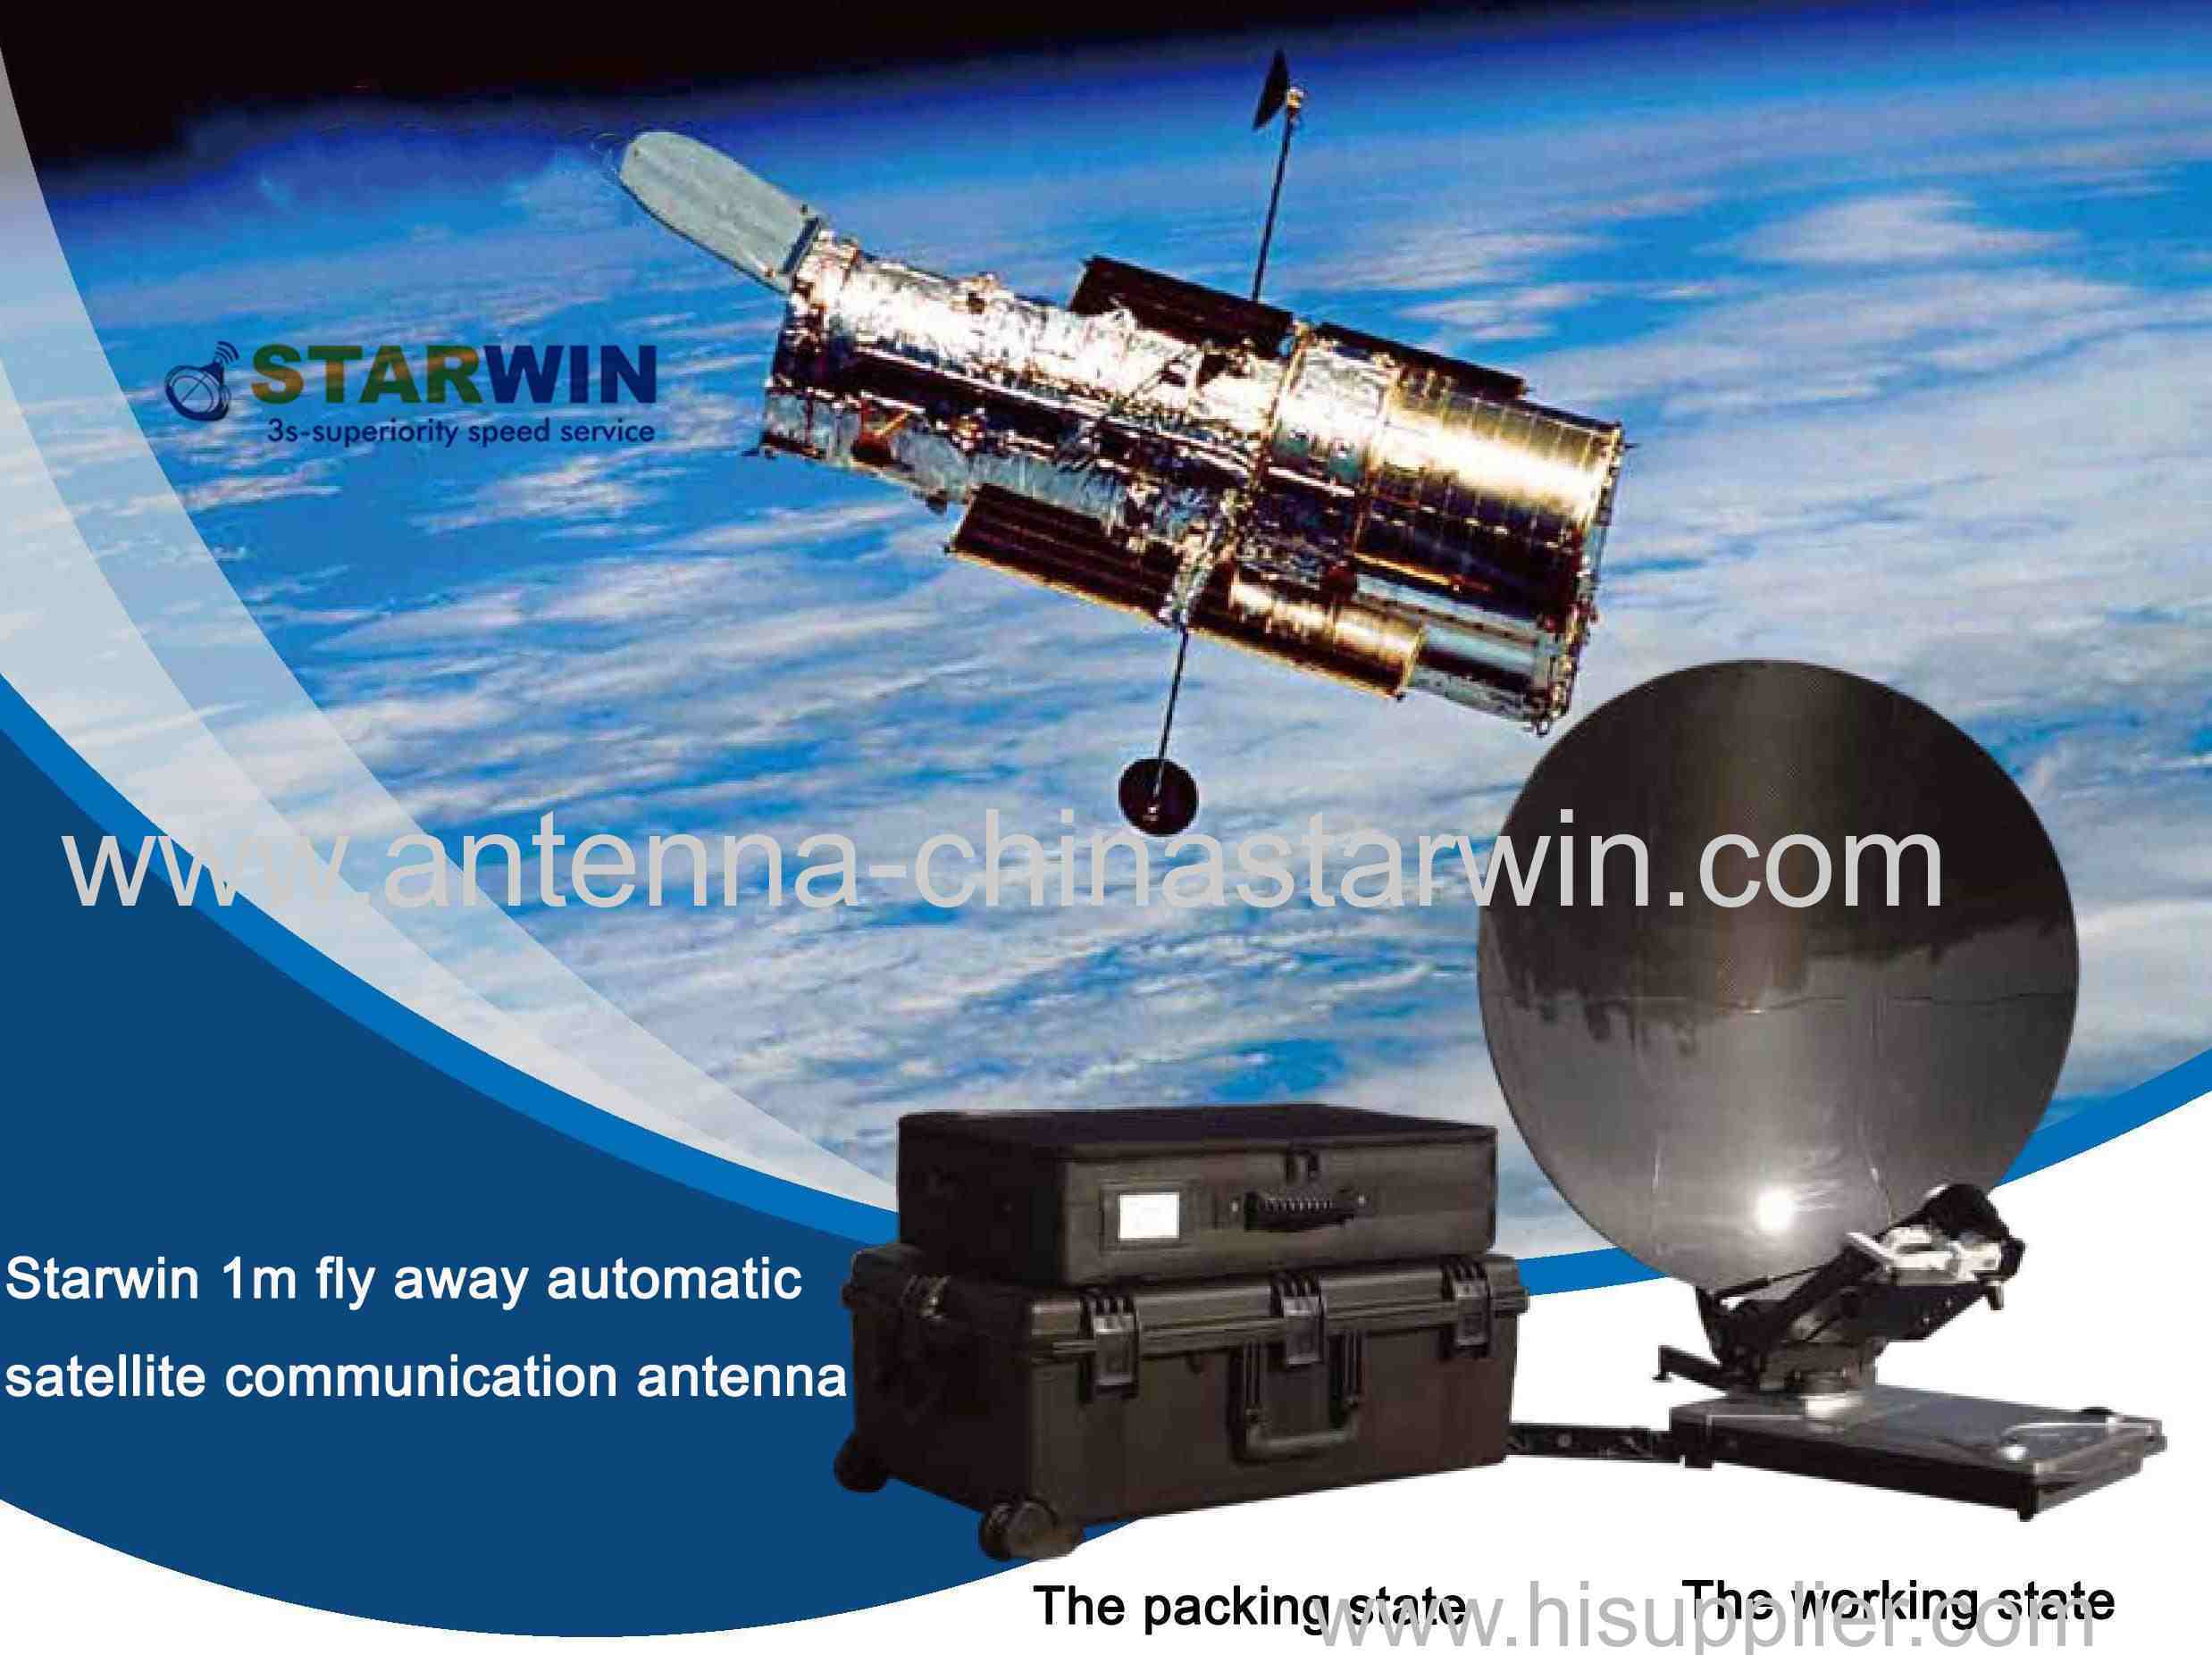 The Starwin 1m fly away automatic satellite communication antenna